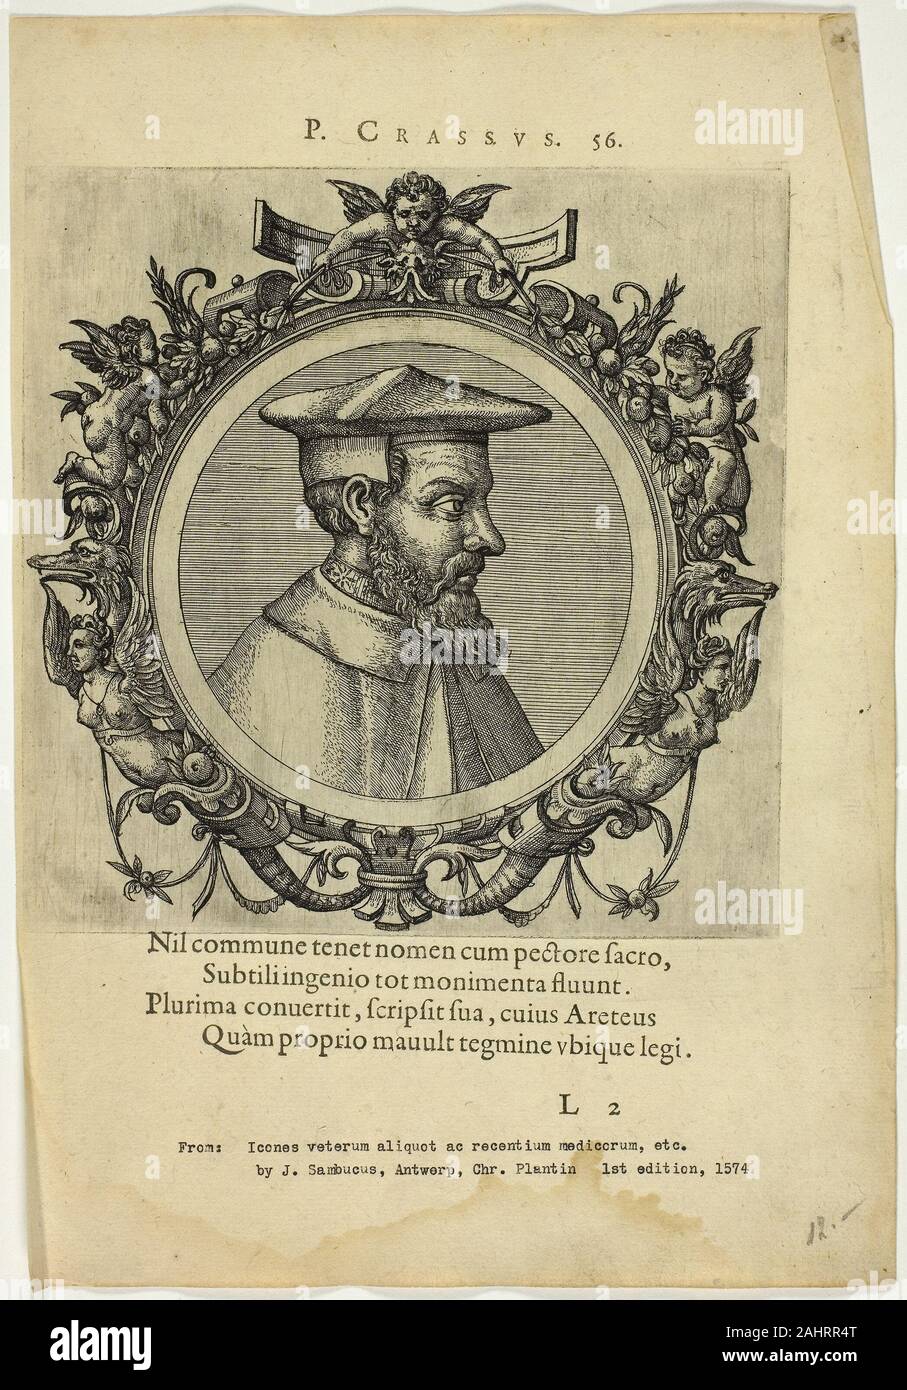 Johannes Sambucus (Author). Portrait of P. Crassus. 1574. Flanders. Etching, with engraving, on cream laid paper Stock Photo